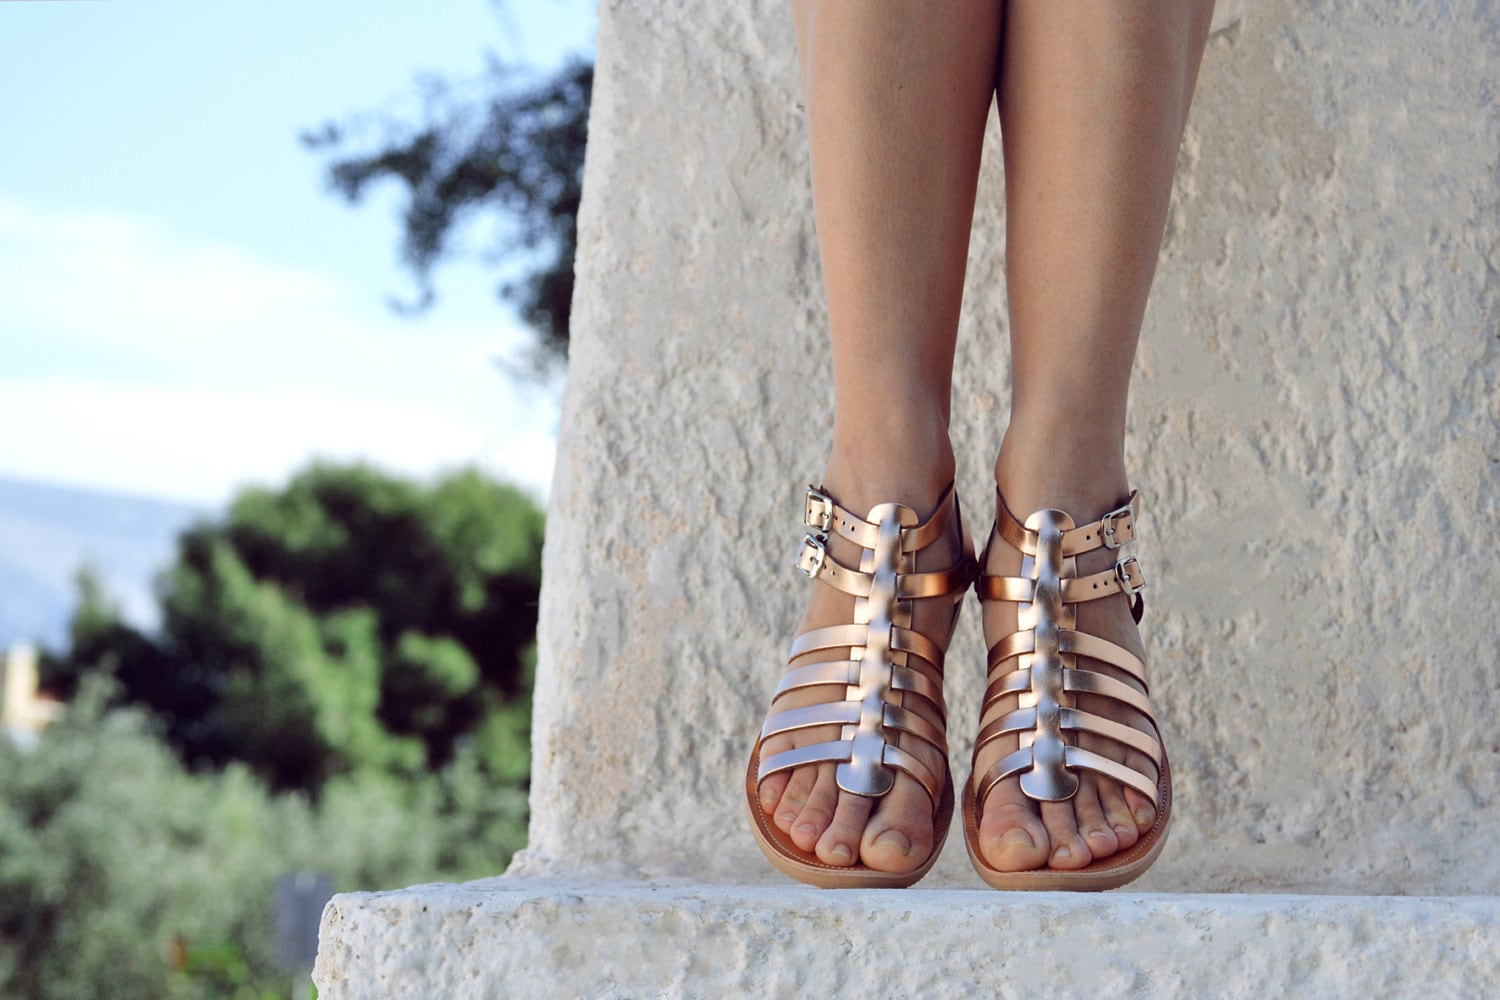 Rouge Gladiator Sandals Heels Open Toe Light Brown Size 7 | eBay